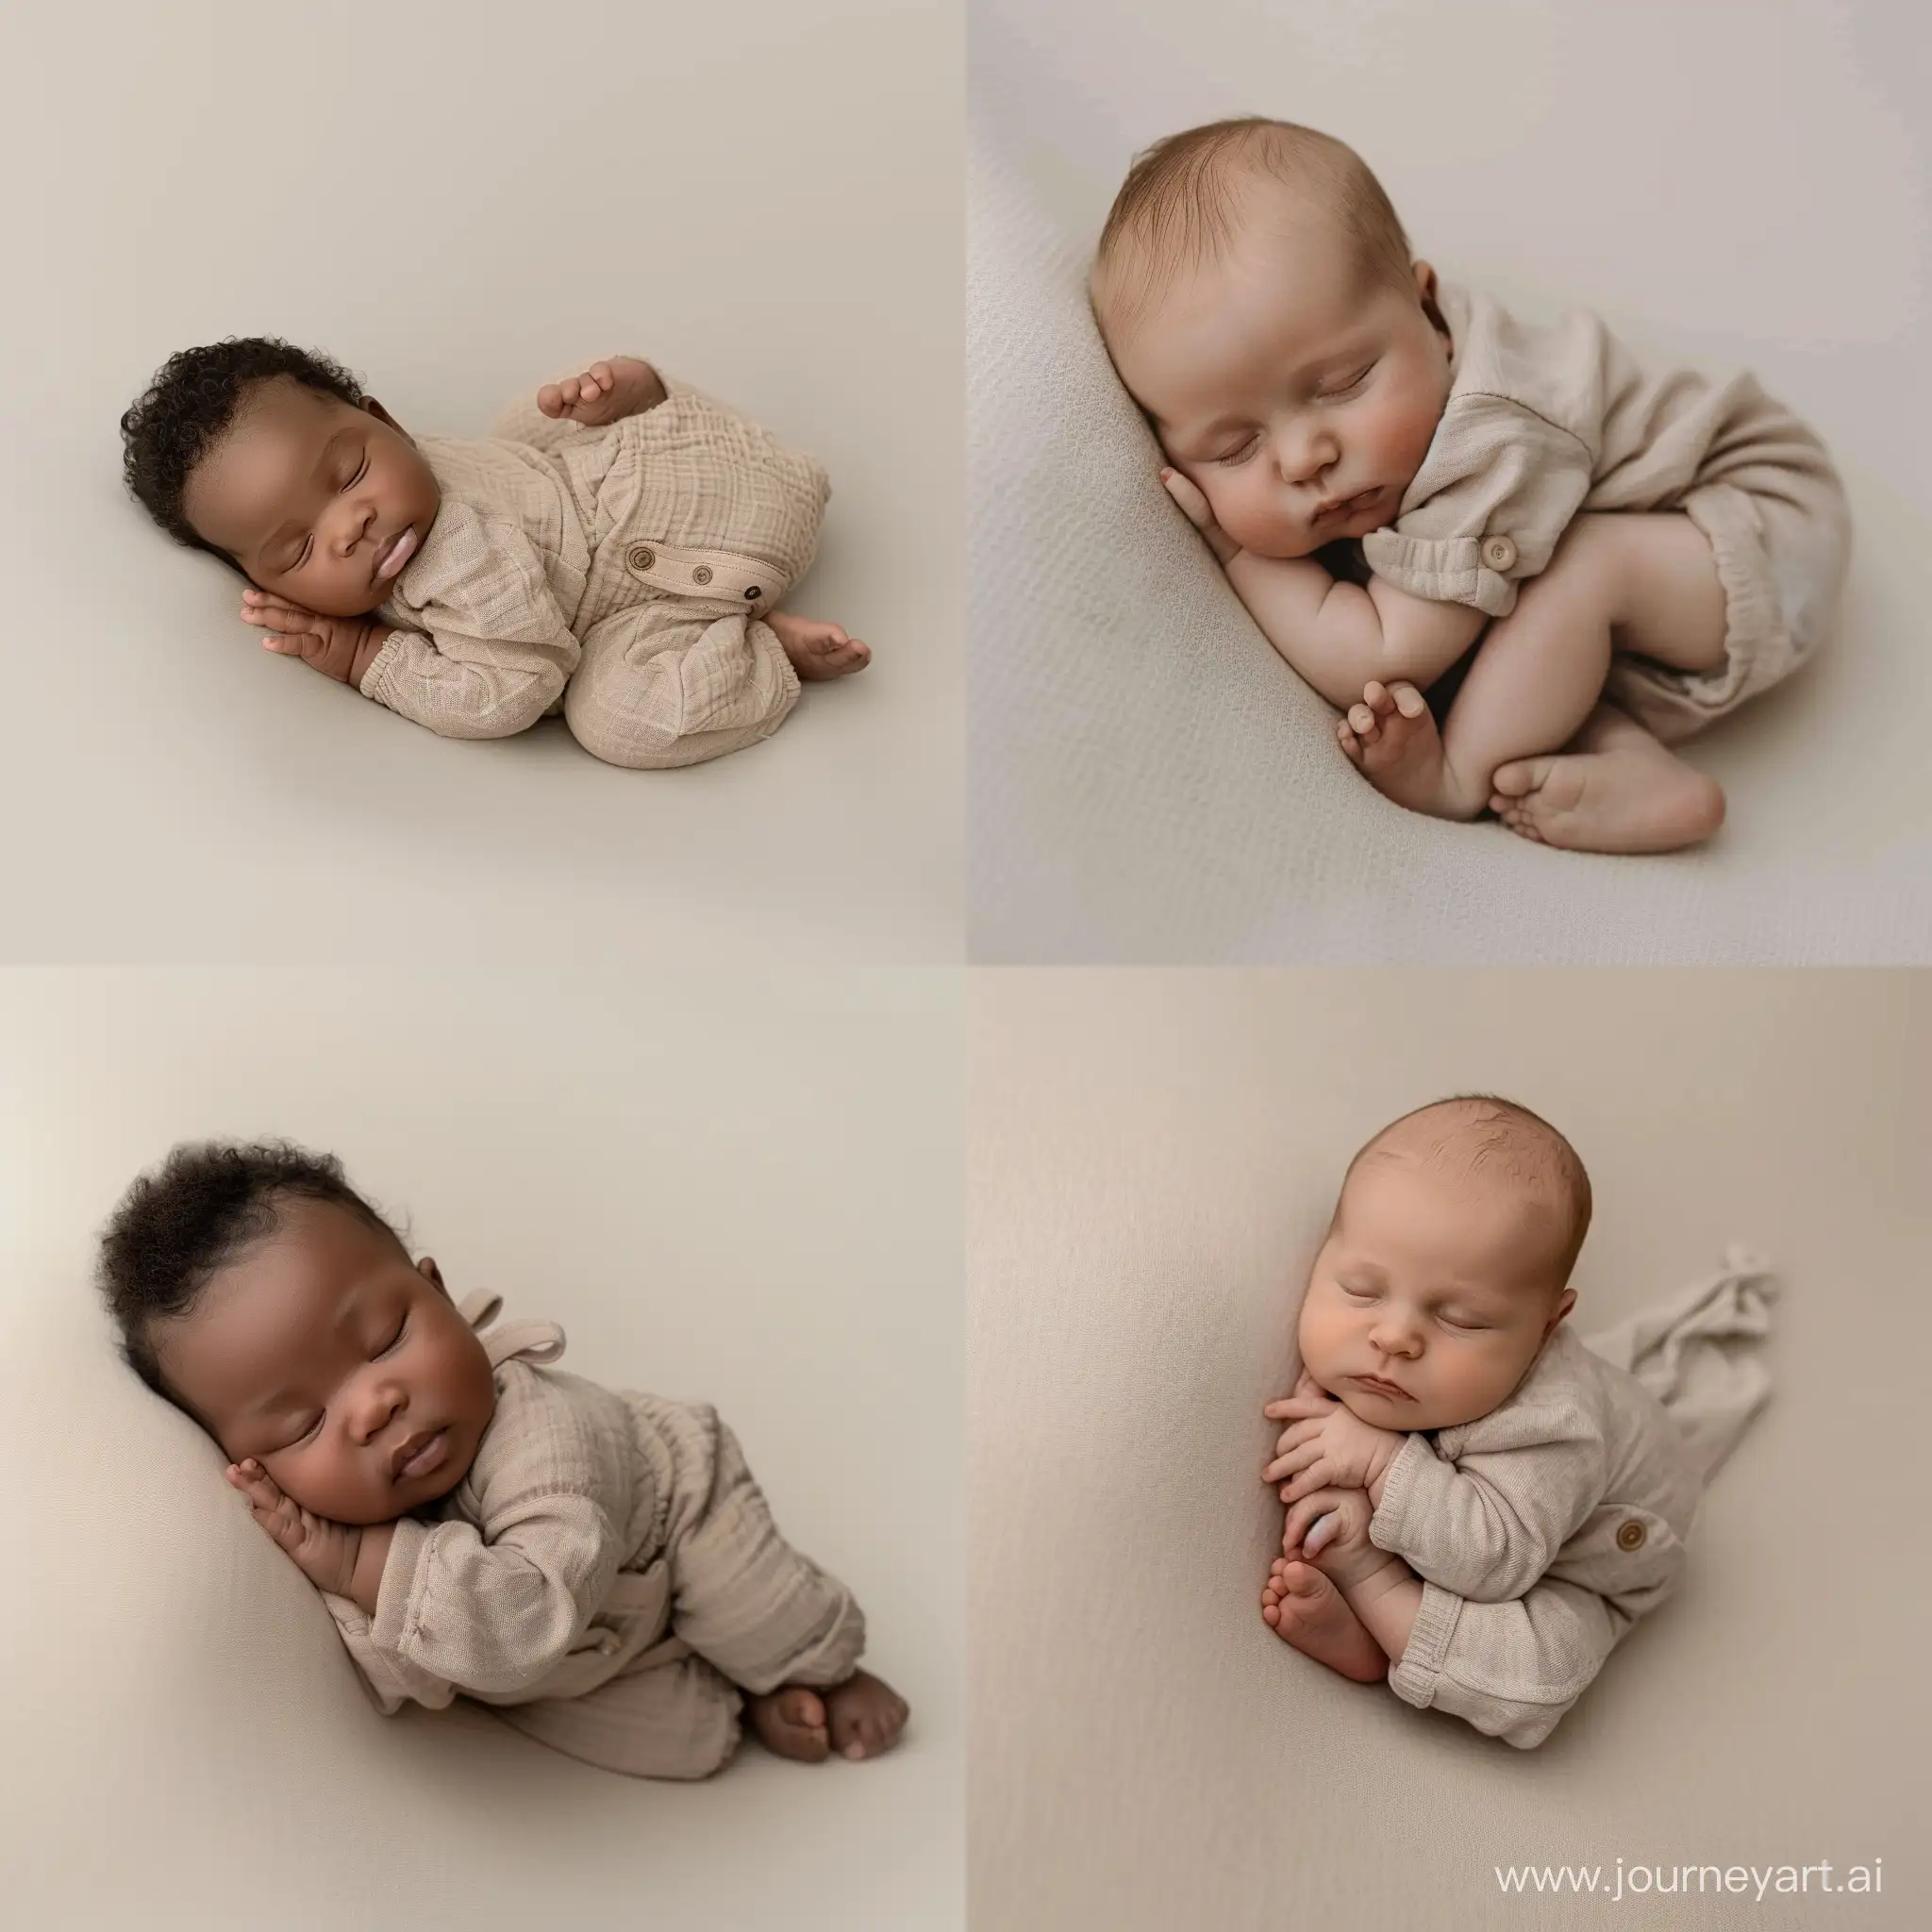 Peaceful-Sleeping-Newborn-Baby-in-Beige-Jumpsuit-on-Plain-Background